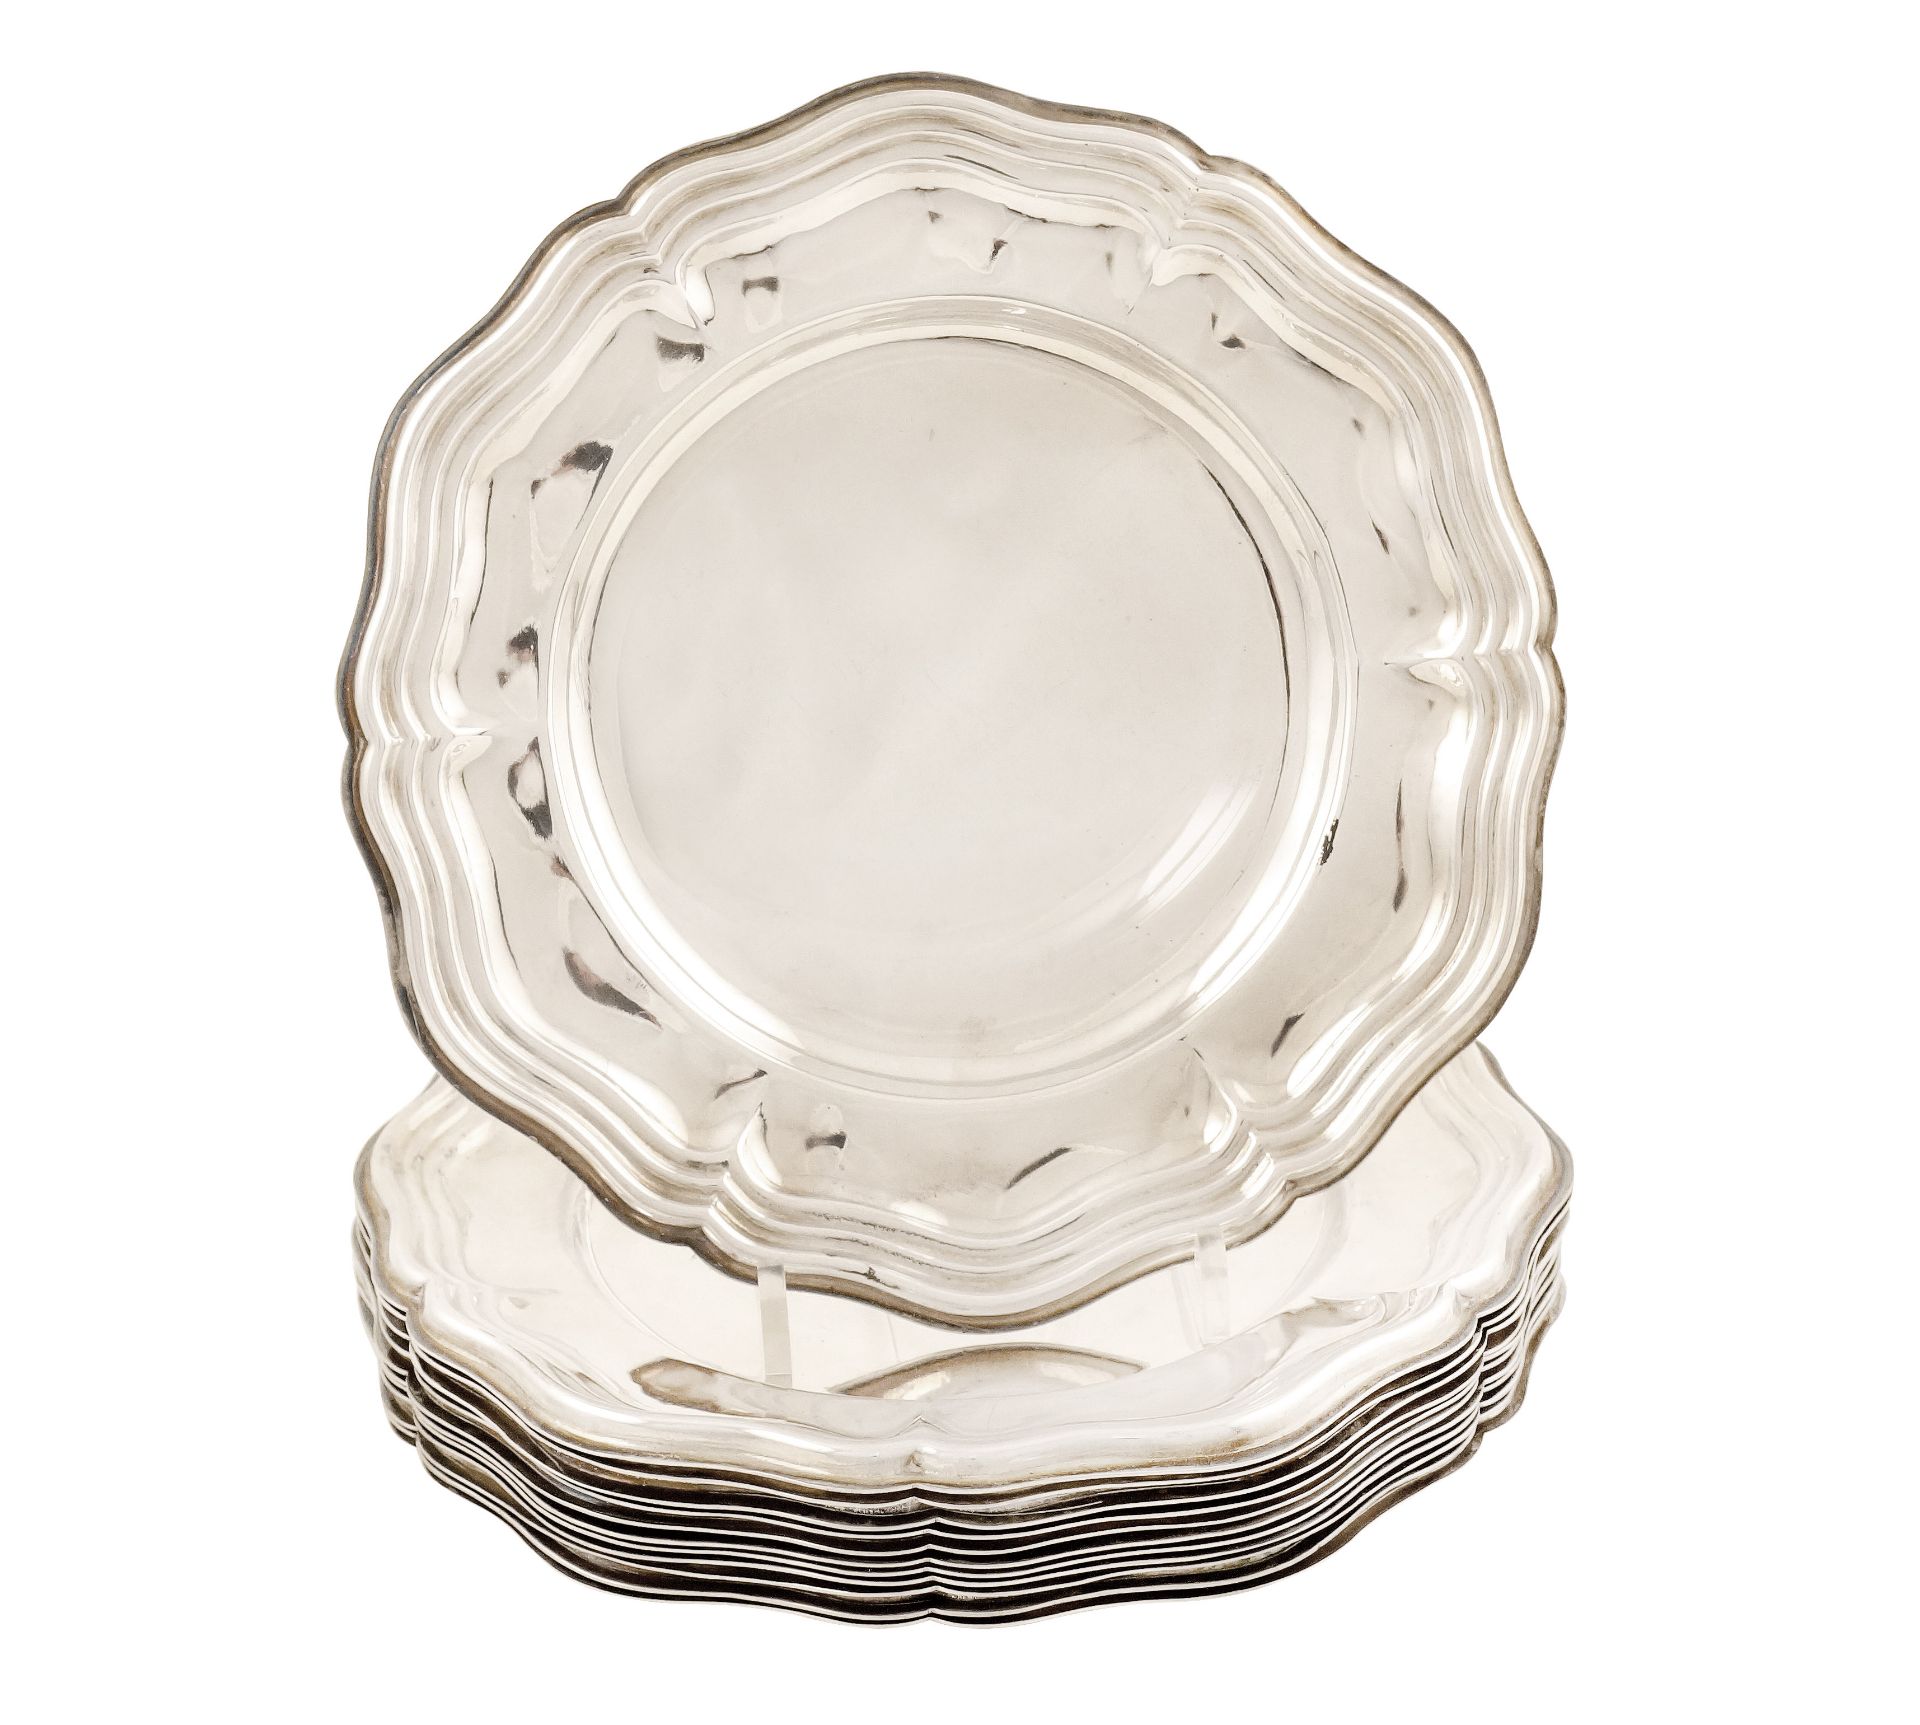 An Italian set of silver plates (12)